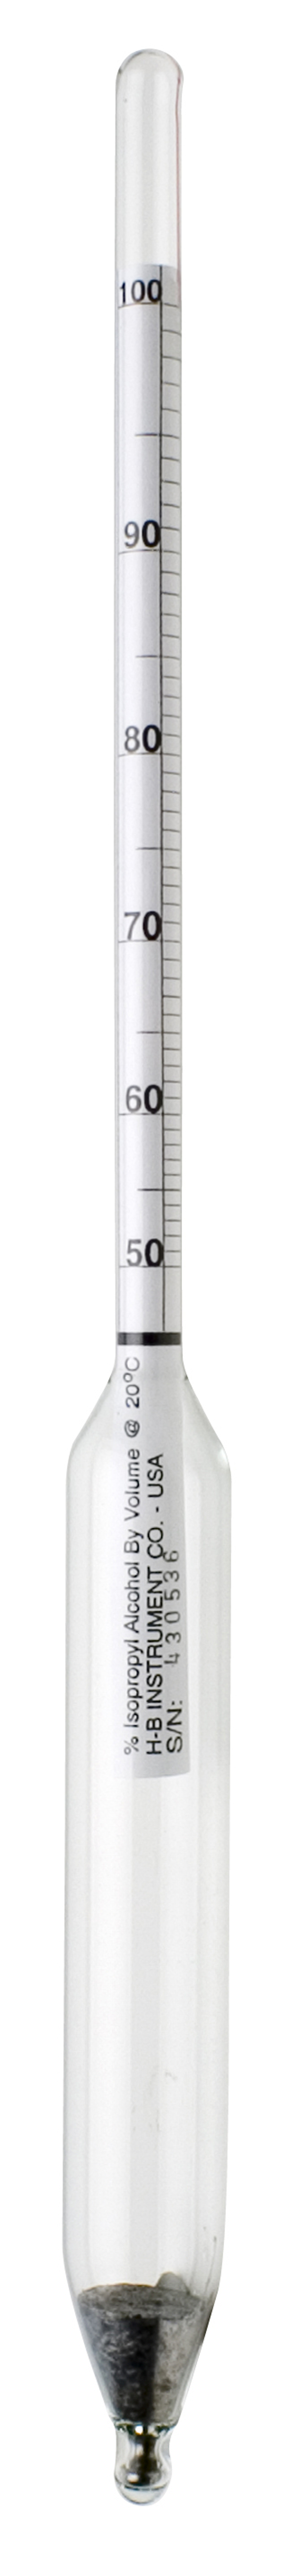 SP Bel-Art, H-B DURAC 50/100 Percent Isopropyl Alcohol Hydrometer